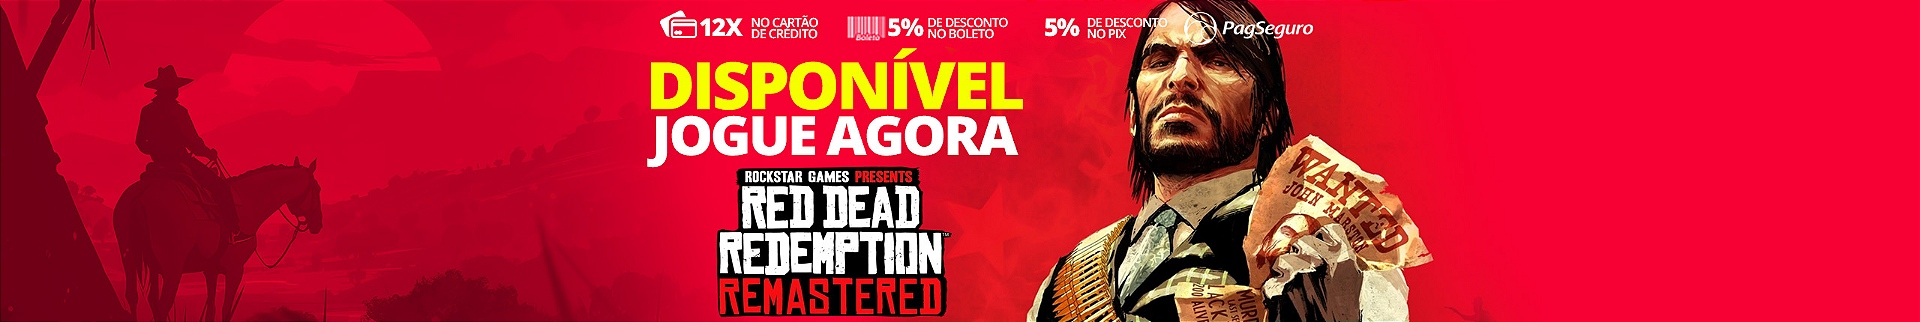 Red Dead Redemption Remastered- standard - PS4